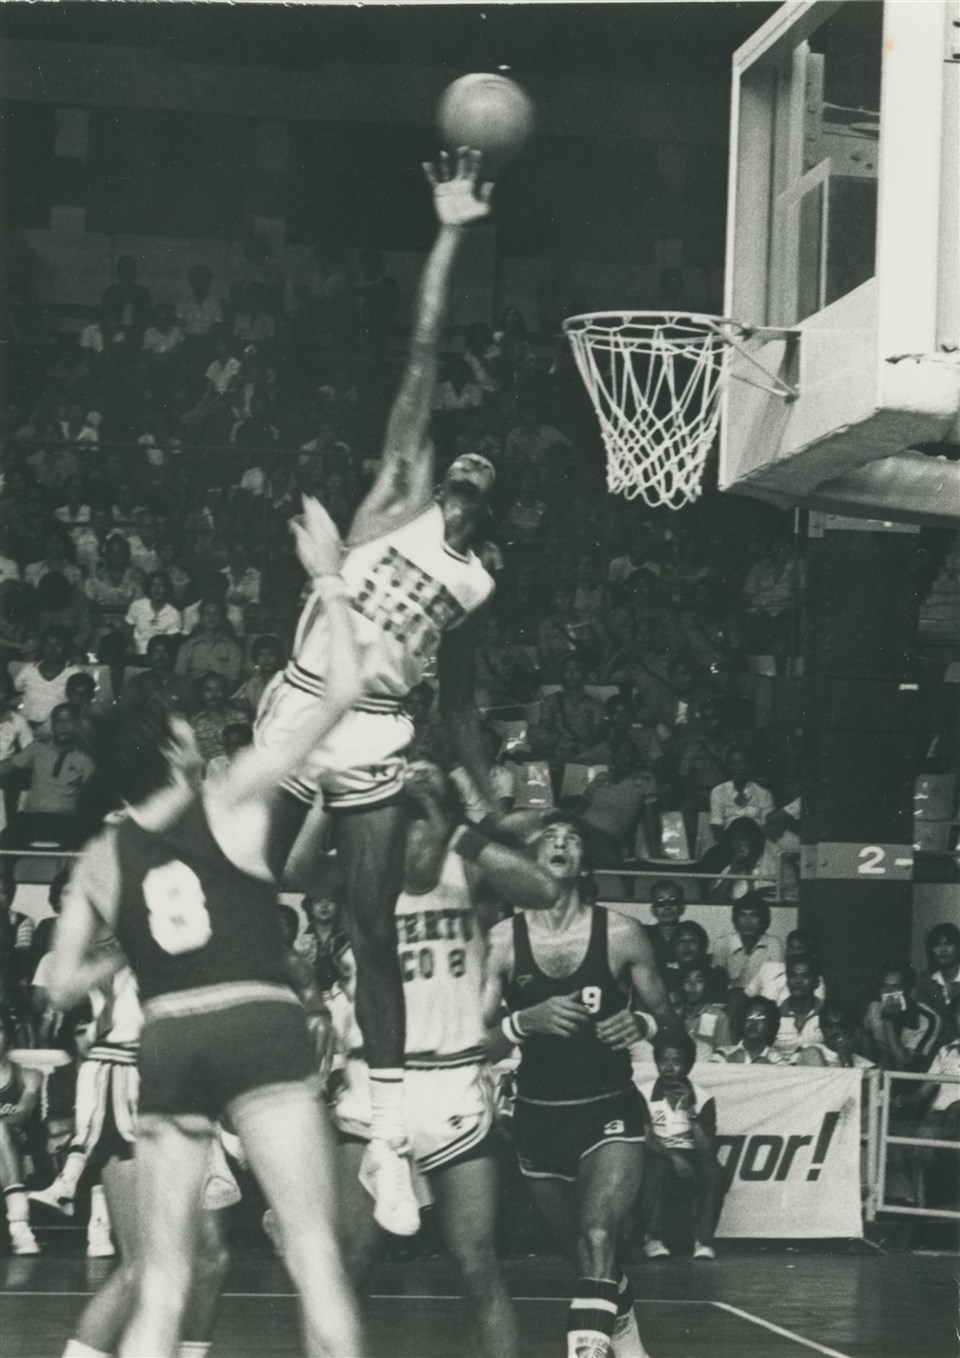 On court action at the 1978 FIBA World Championship